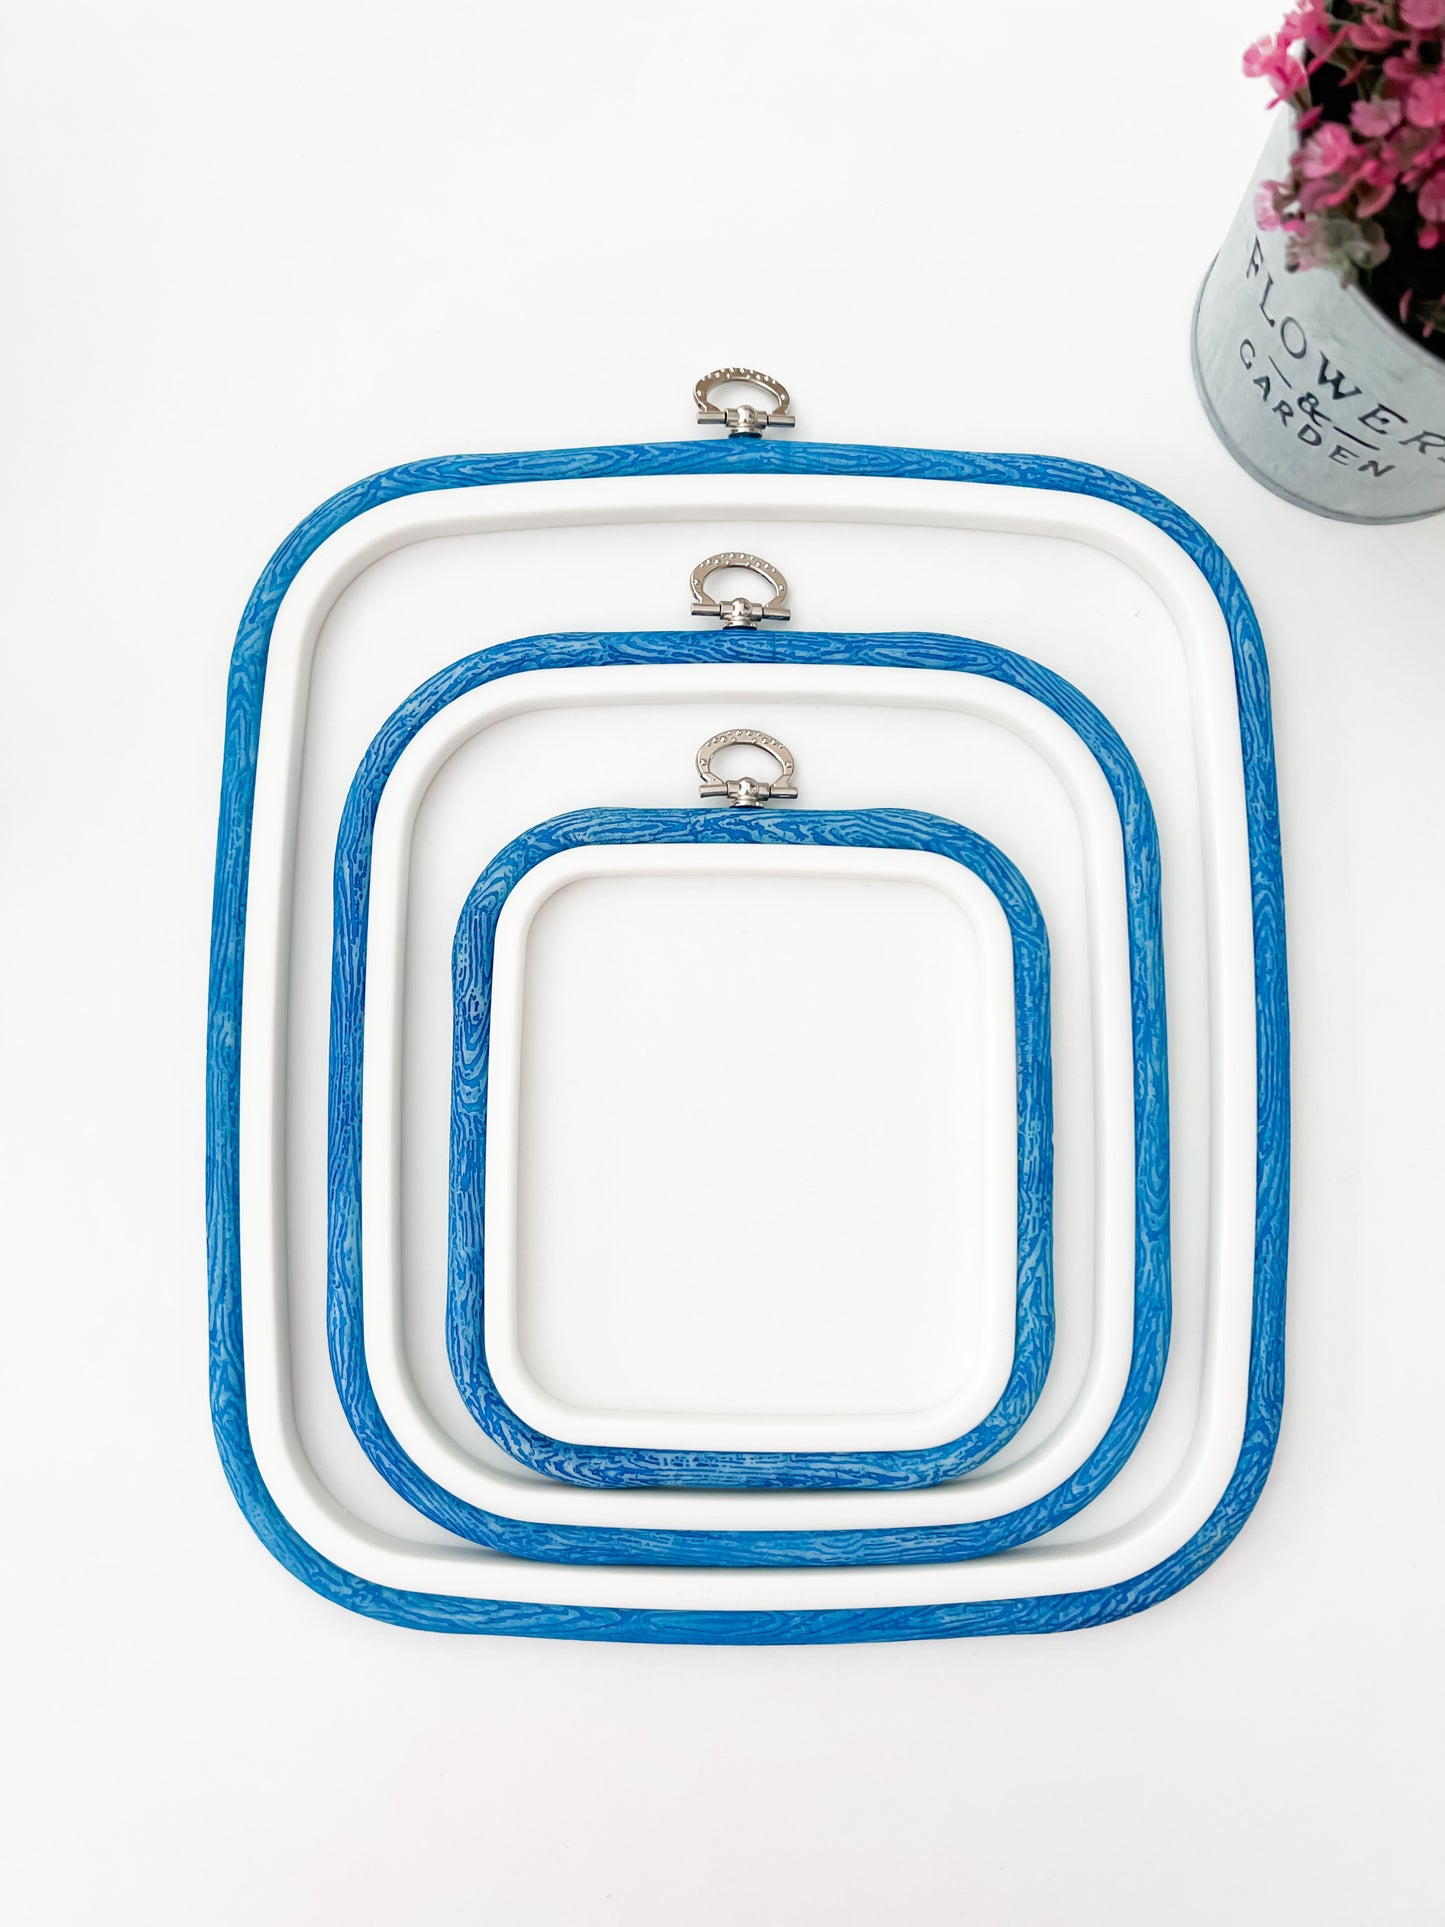 Embroidery Hoops - Nurge Flexi Hoops, Square